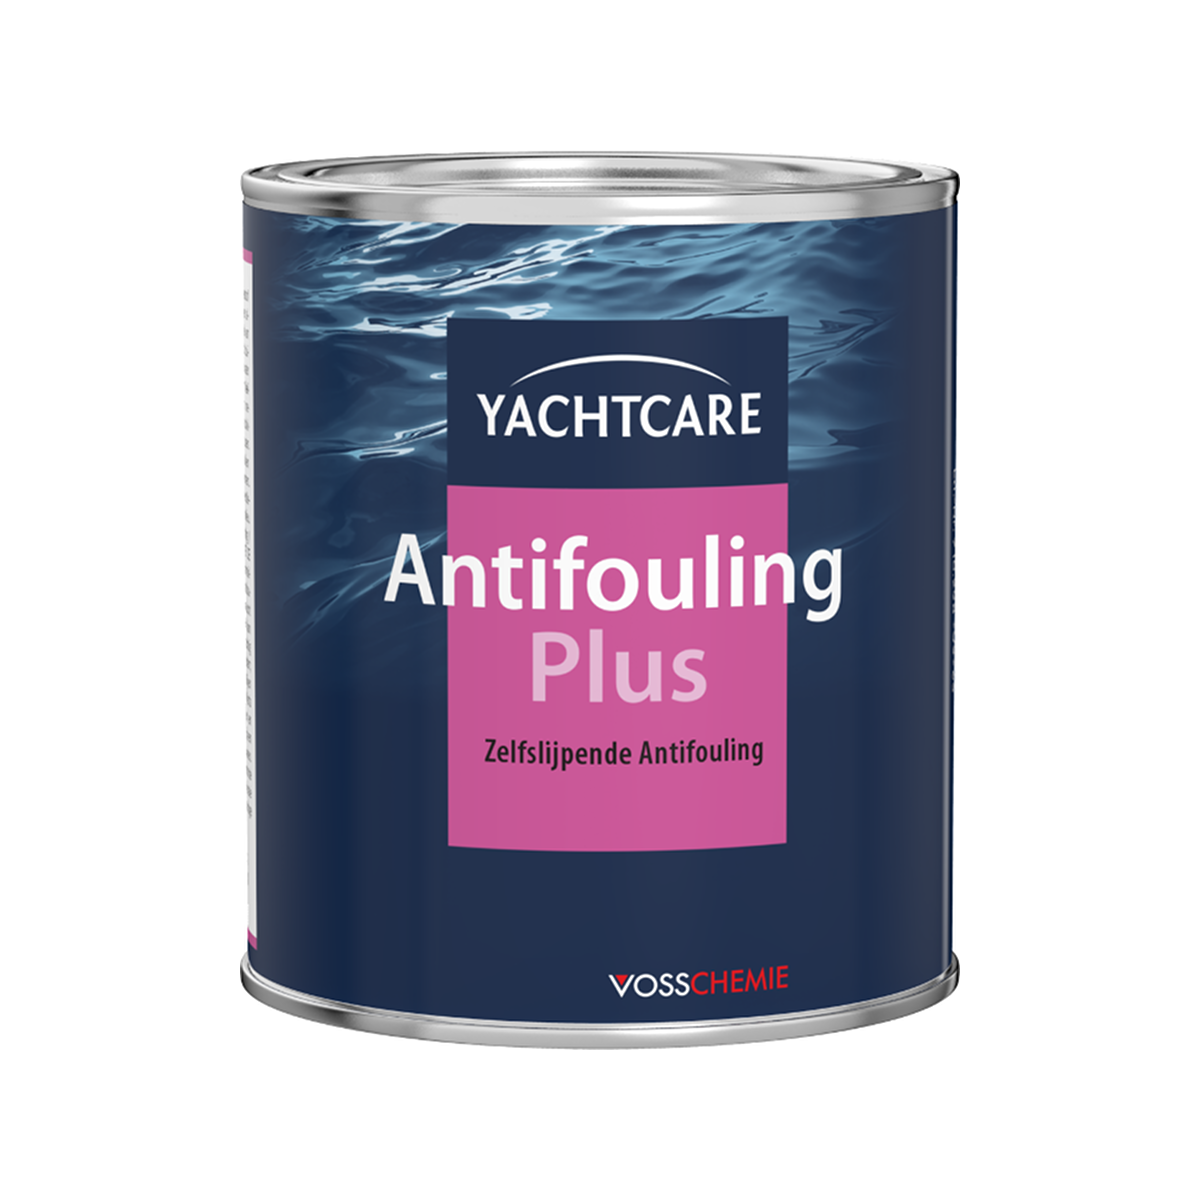 Yachtcare Plus Antifouling toegelaten in Nederland – blauw, 750ml